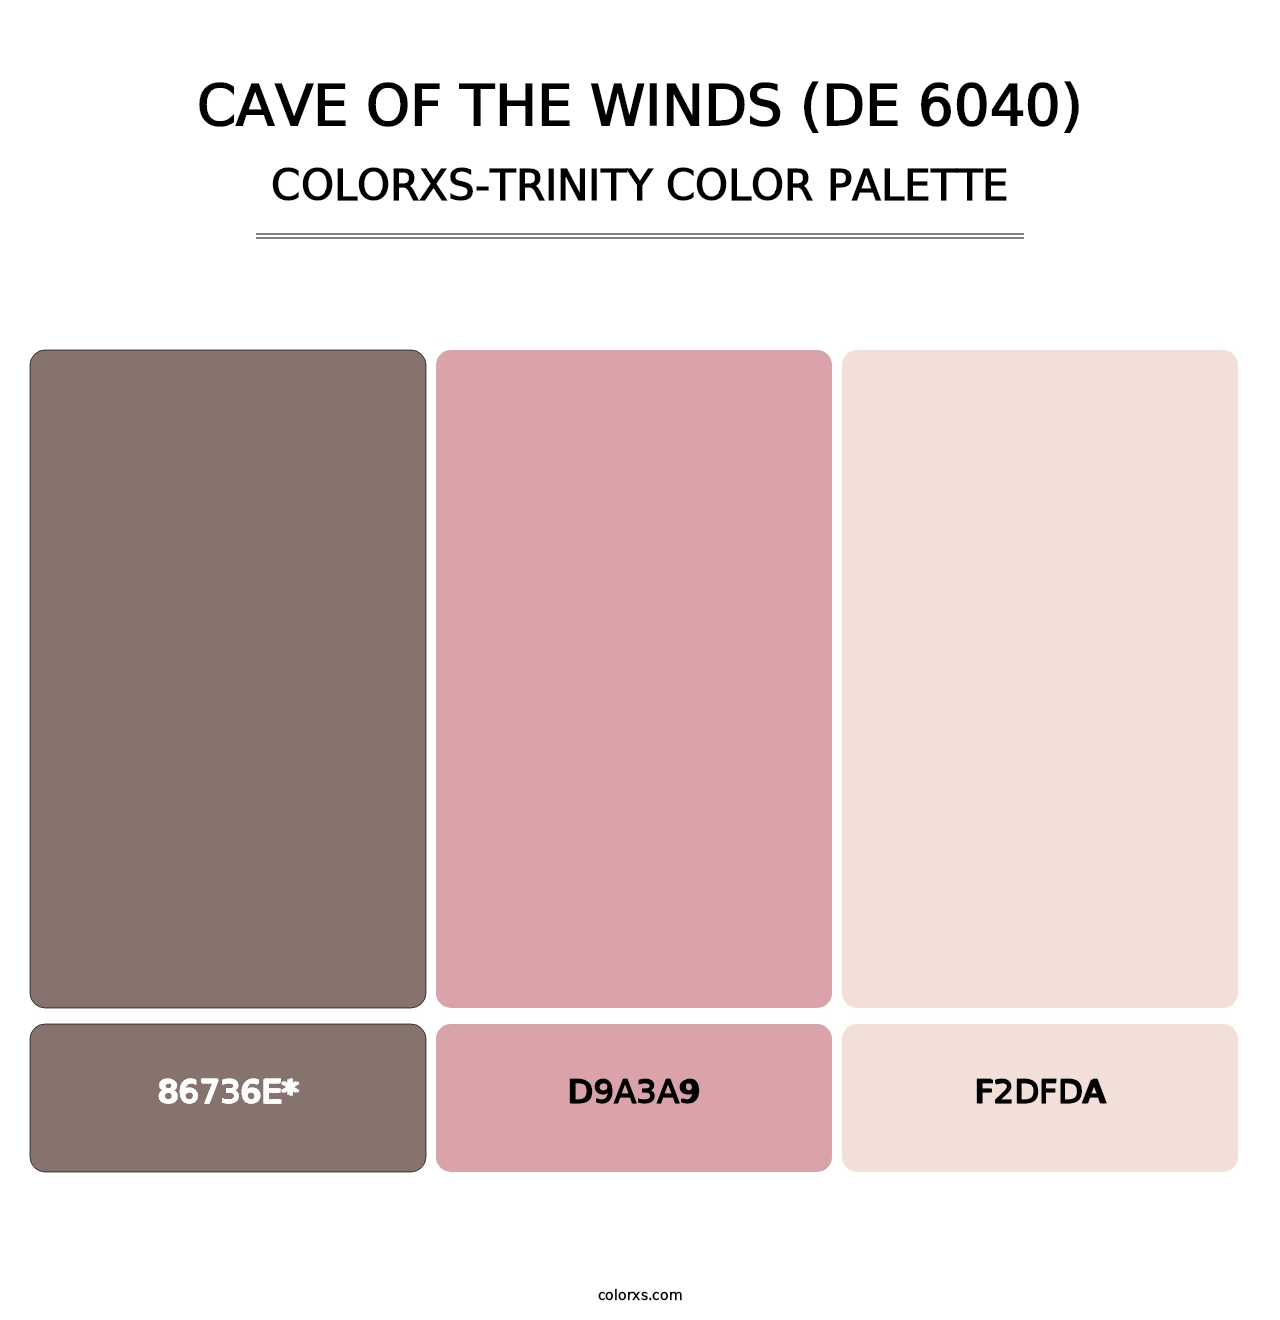 Cave of the Winds (DE 6040) - Colorxs Trinity Palette